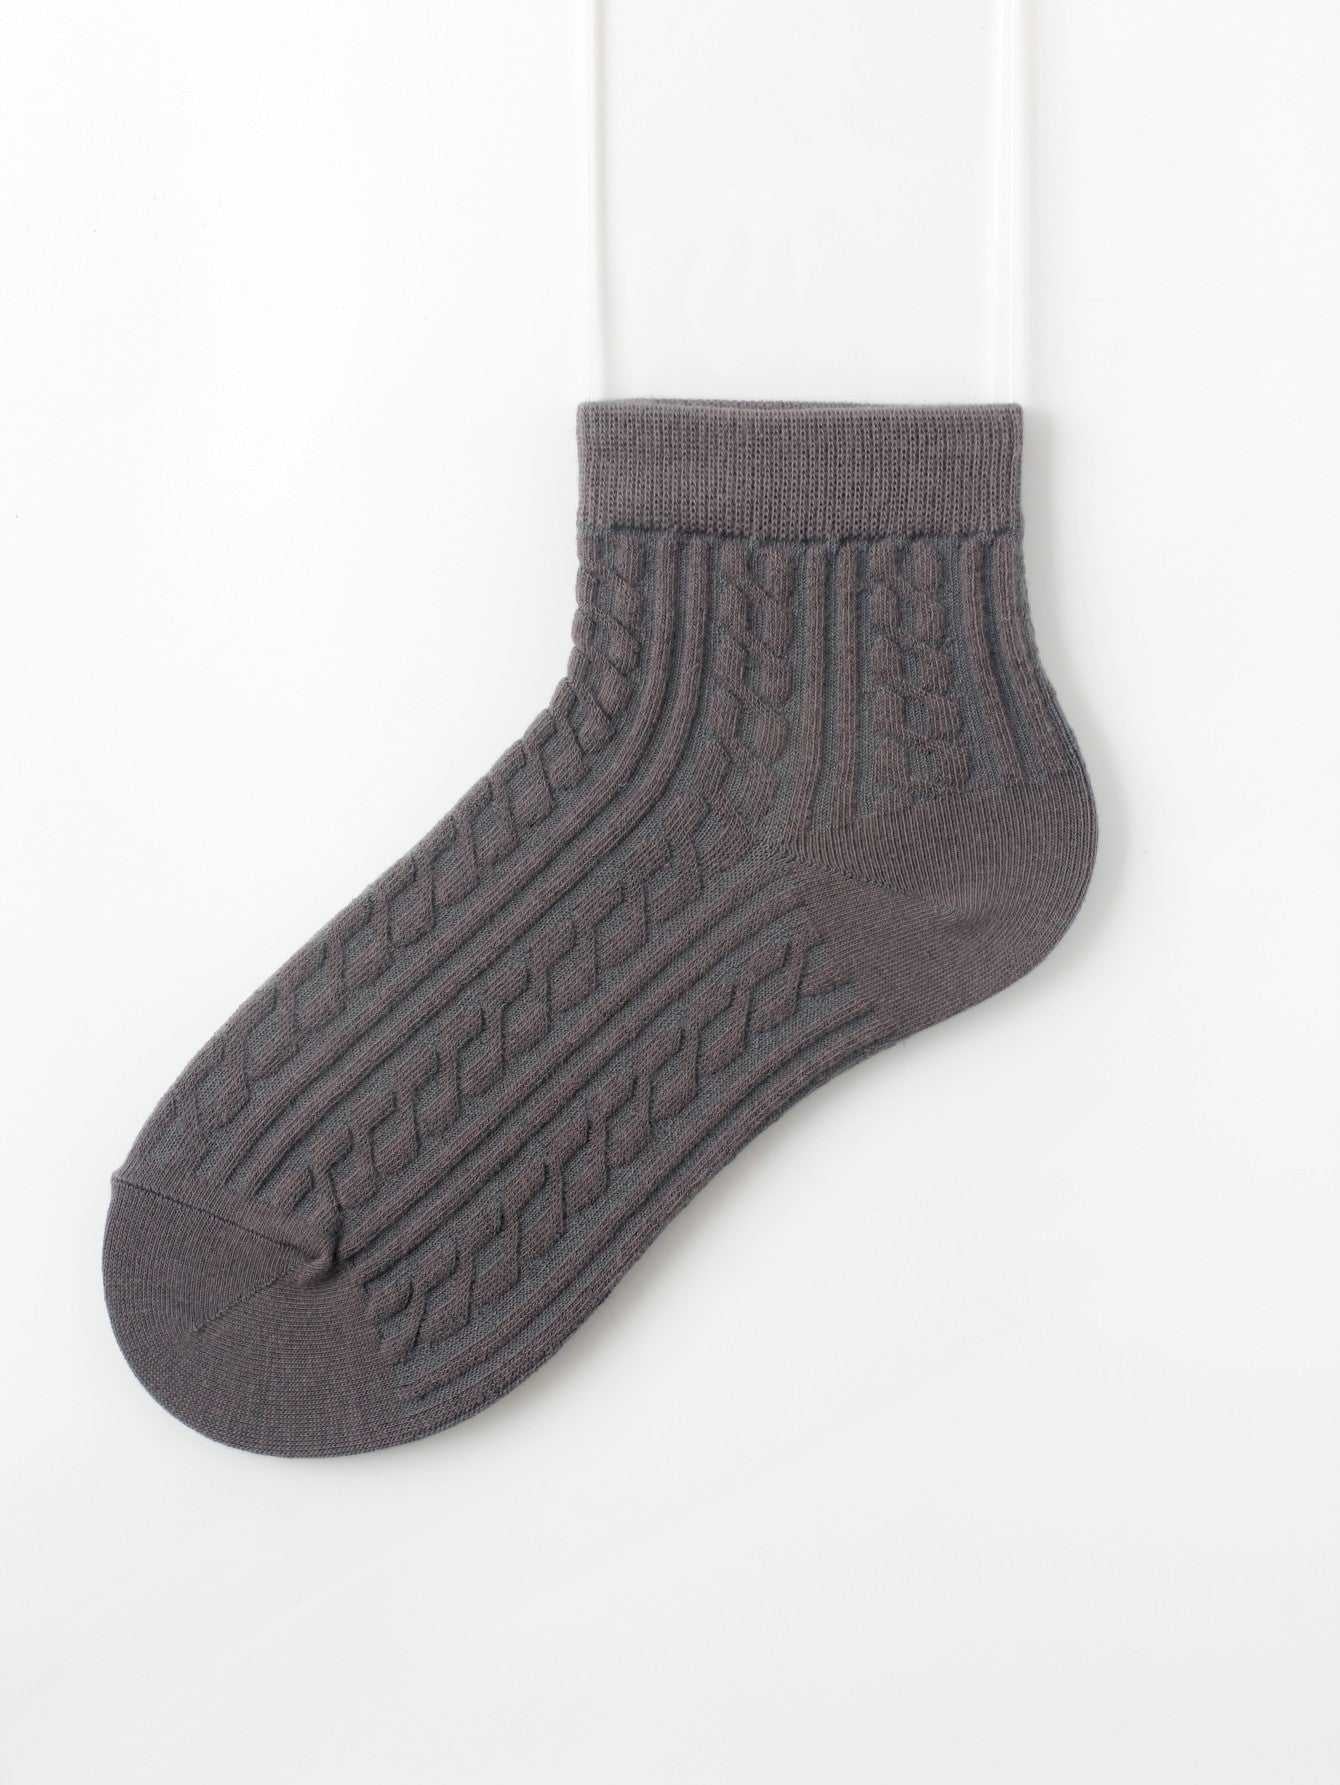 5 pairs Solid Color Twist Socks Casual Ankle High Low Cut Socks Sai Feel